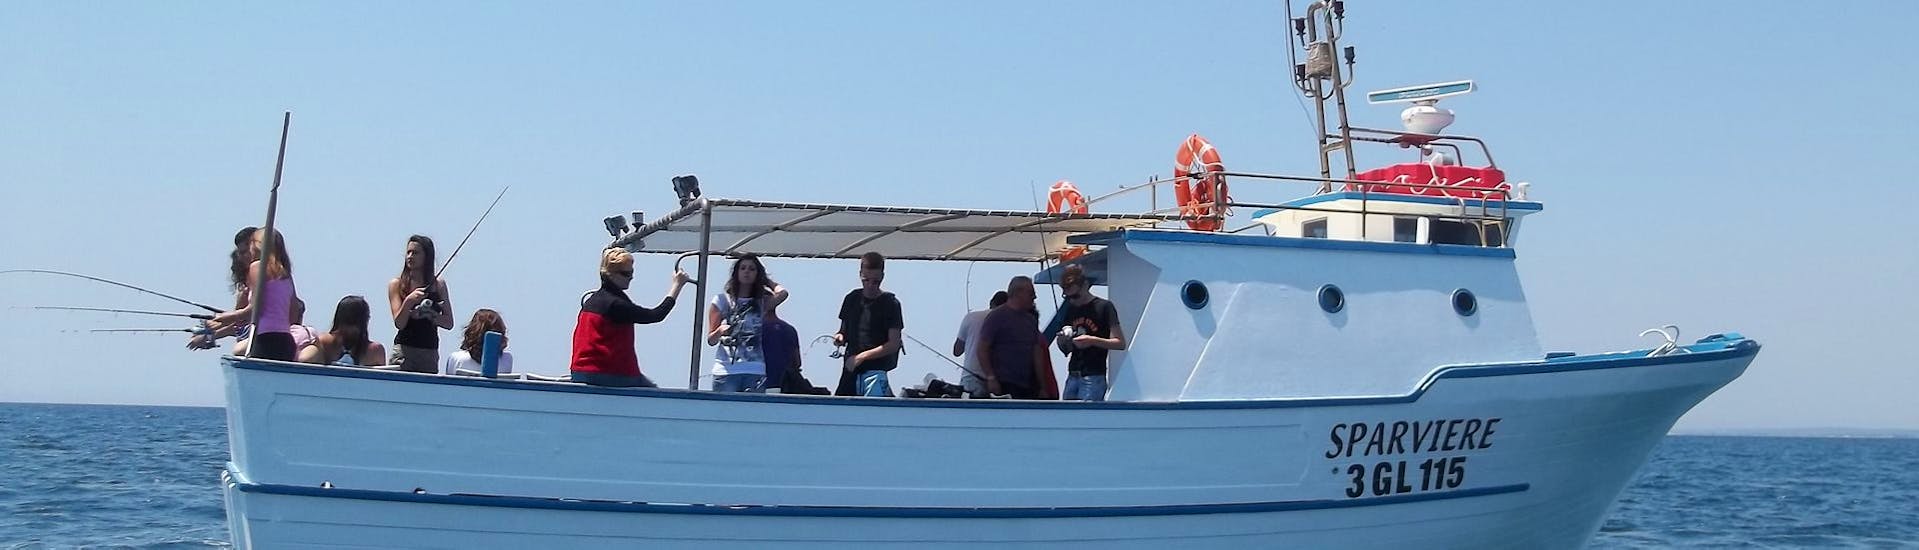 Photo d'un bateau du Pescaturismo Vivereilmare Porto Cesareo pendant la balade en bateau à Porto Cesareo avec expérience de pêche.